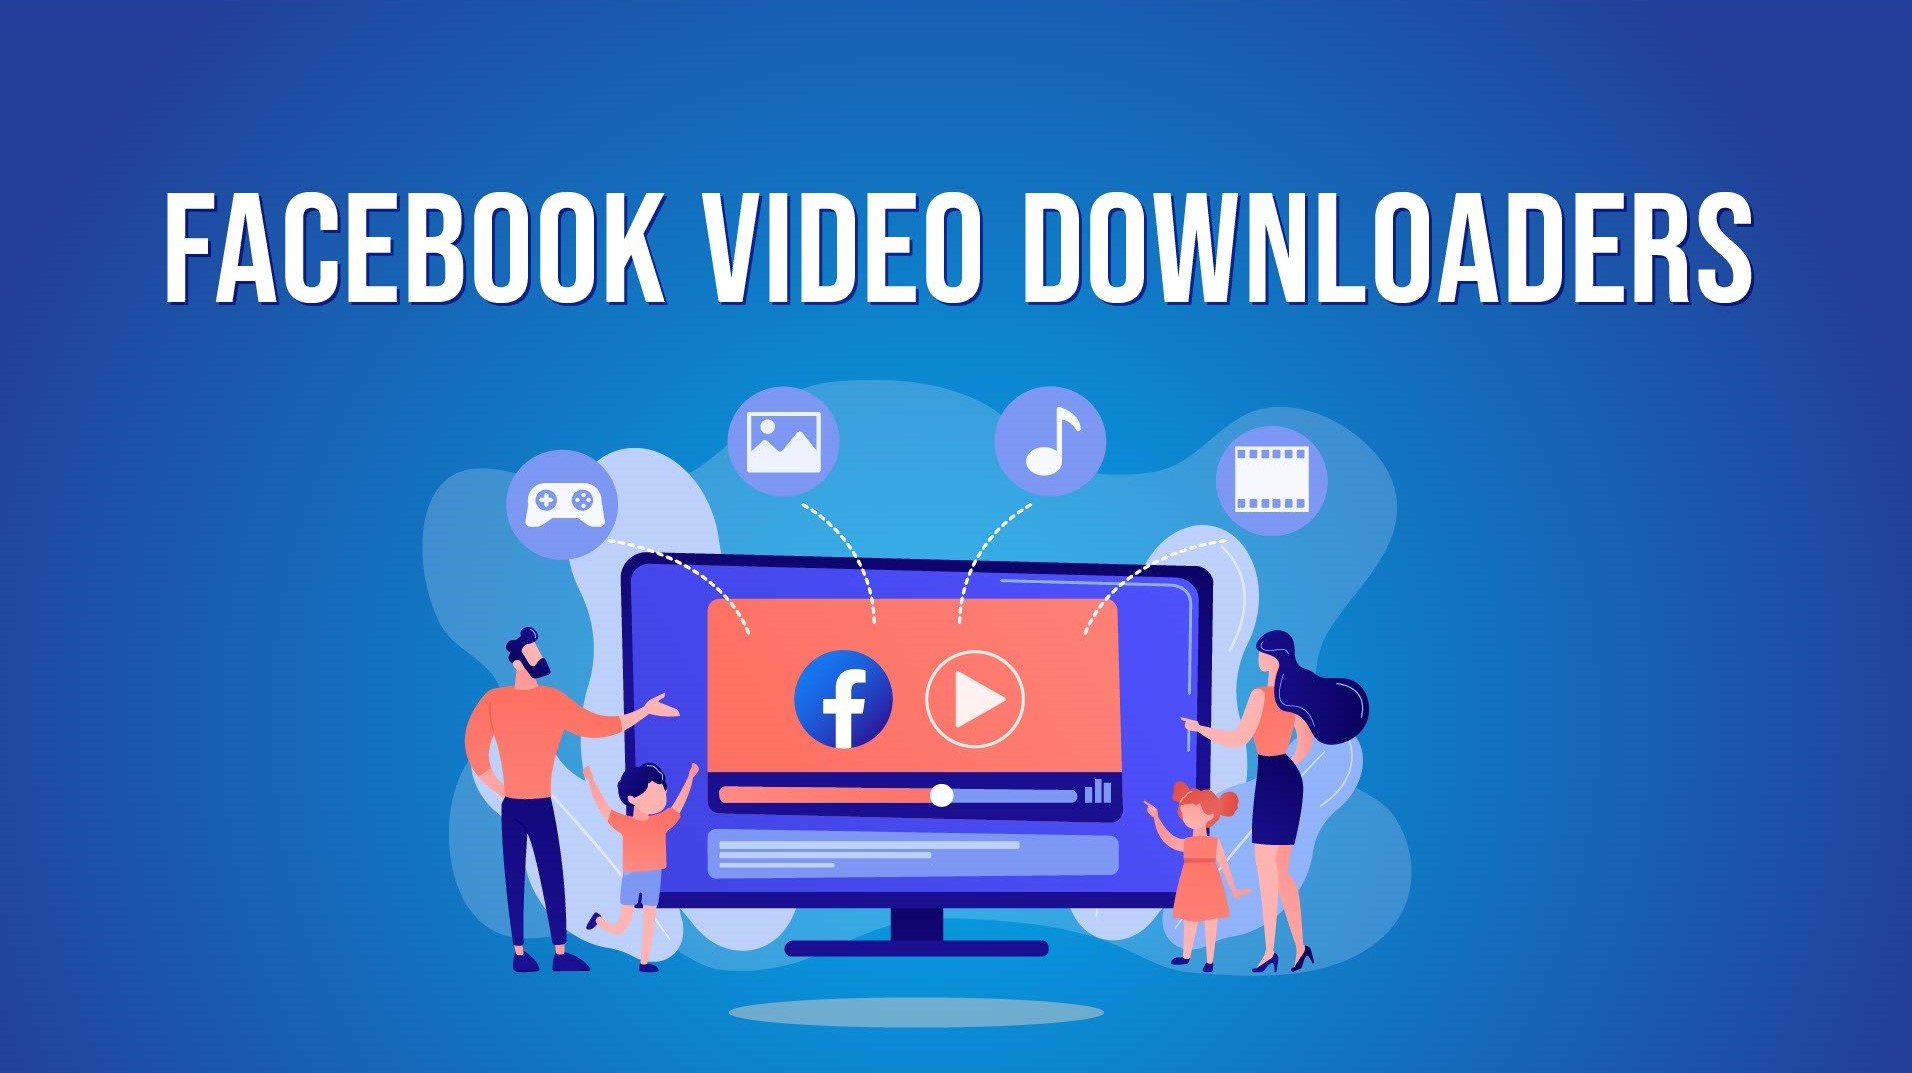 Facebook Video Downloader: Balancing Convenience, Ethics